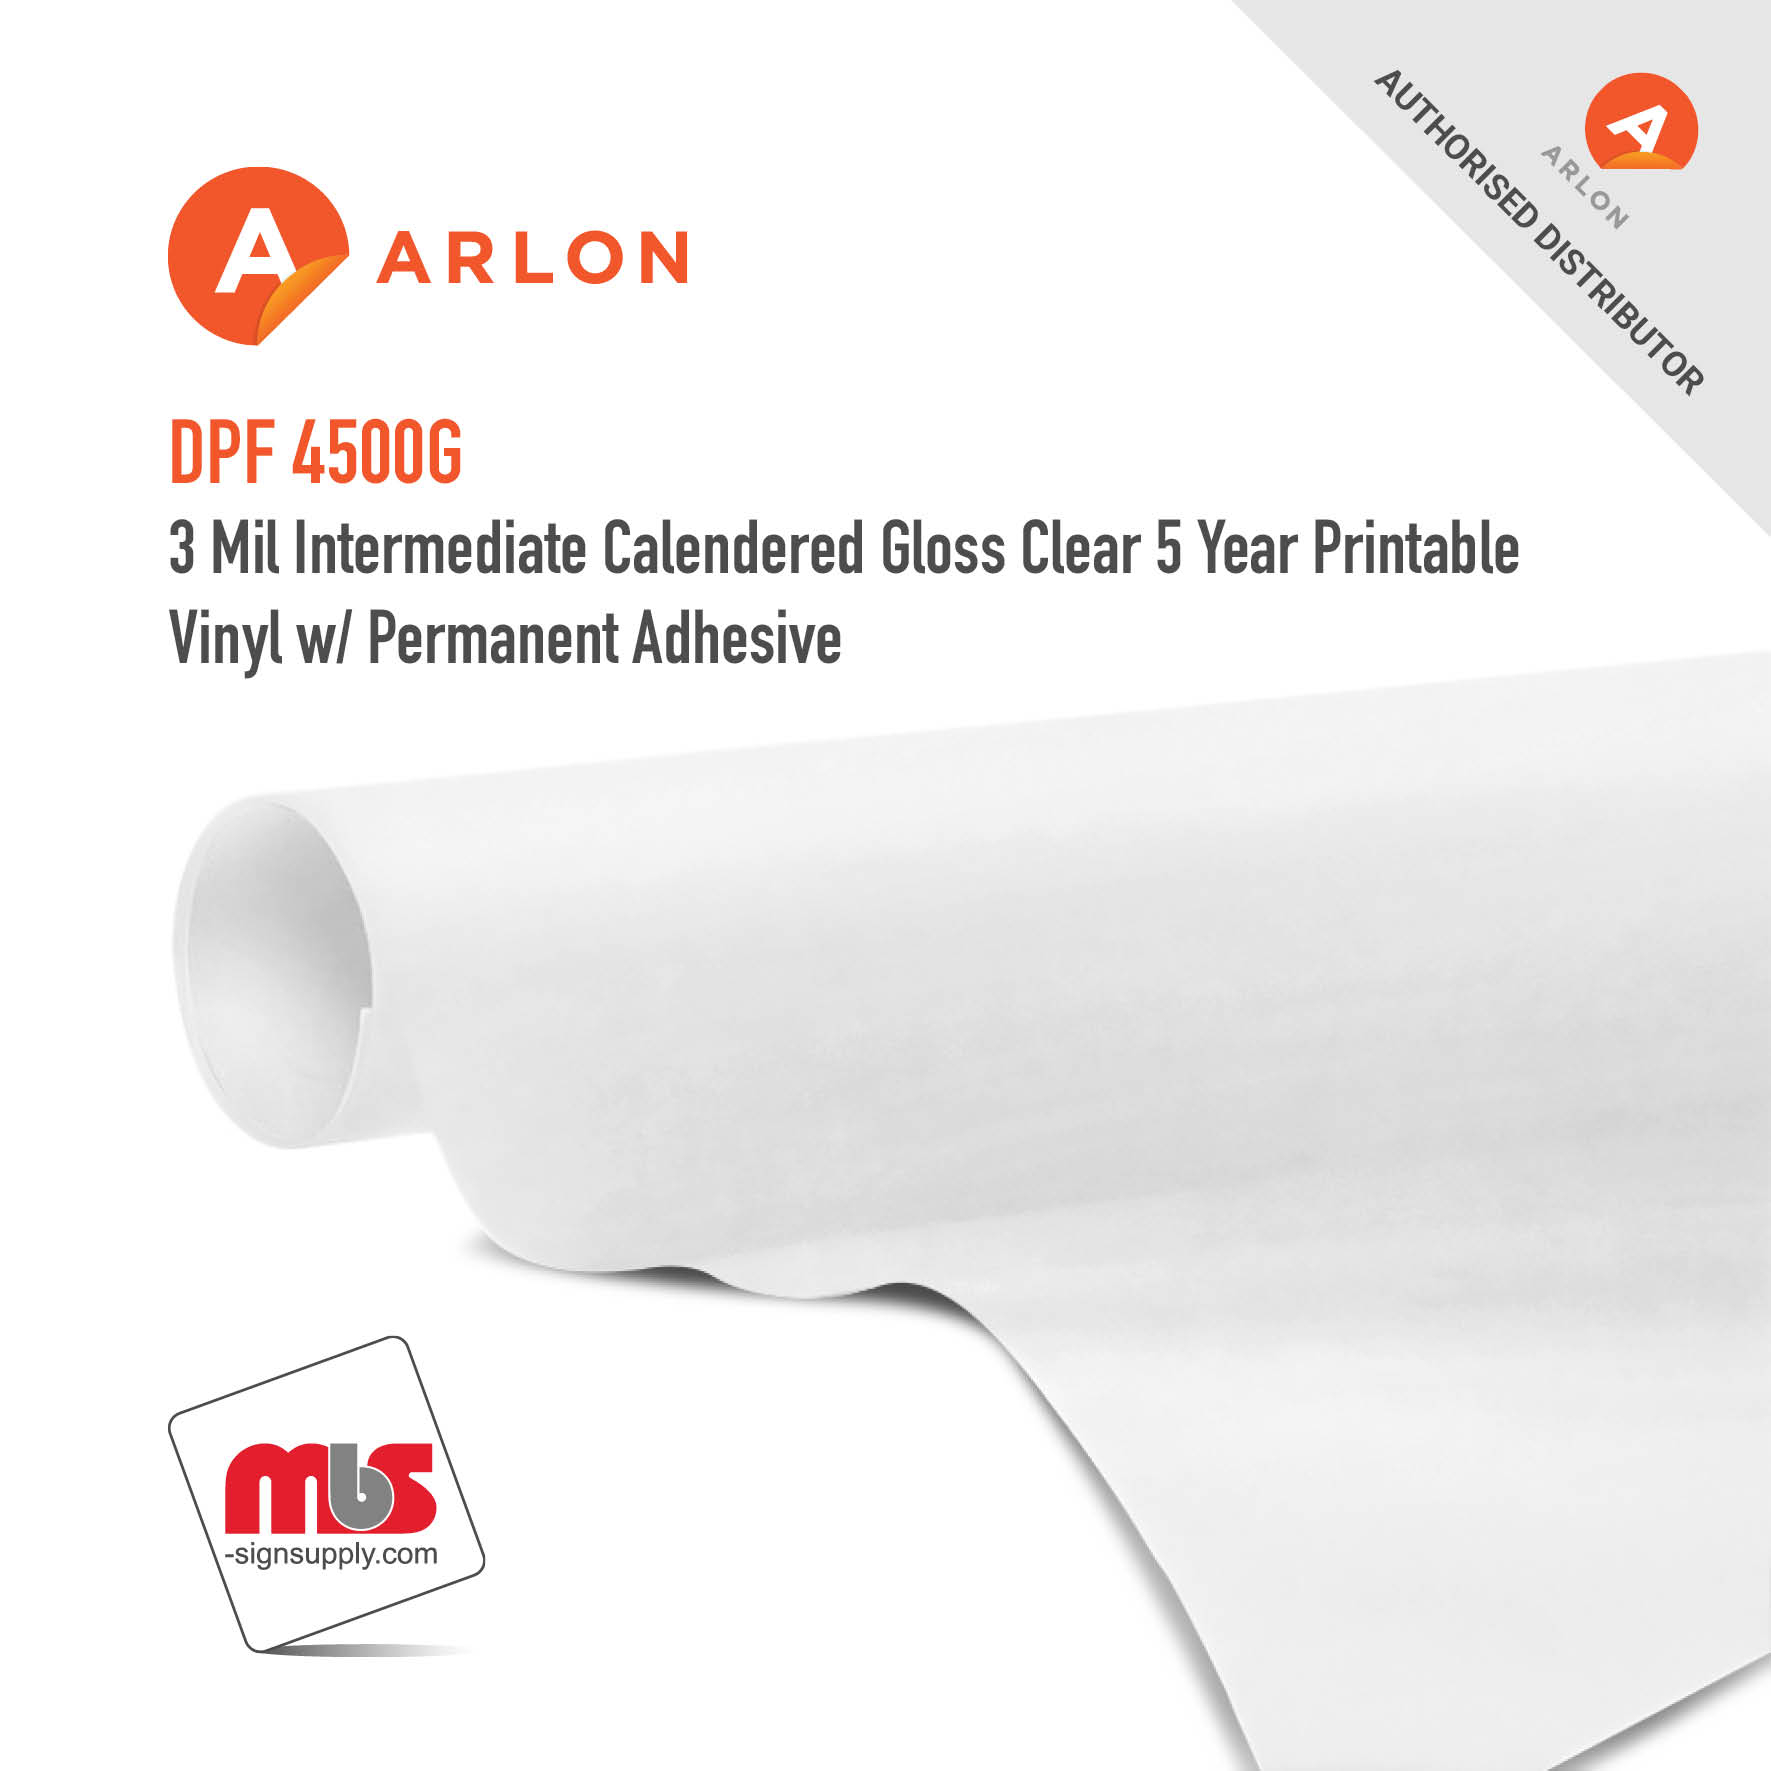 30'' x 50 Yard Roll - Arlon DPF 4500C 3 Mil Intermediate Calendered Gloss Clear 5 Year Printable Vinyl w/ Permanent Adhesive